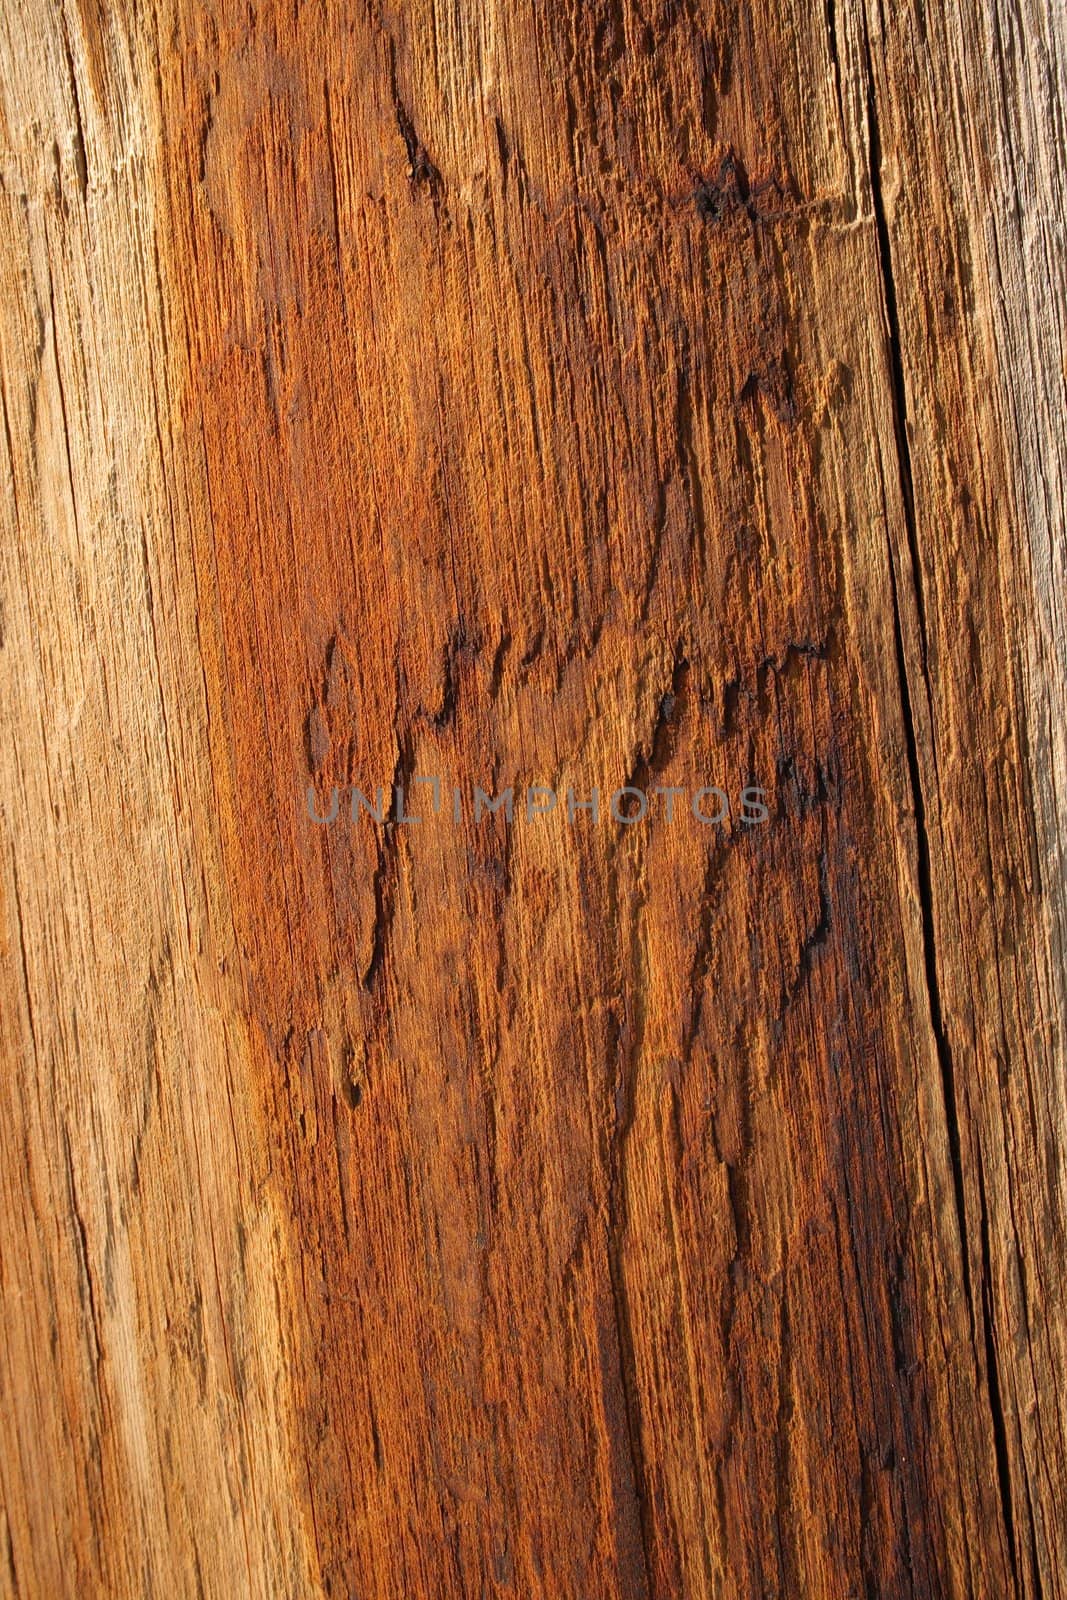 Cracked wood texture of warm orange color.